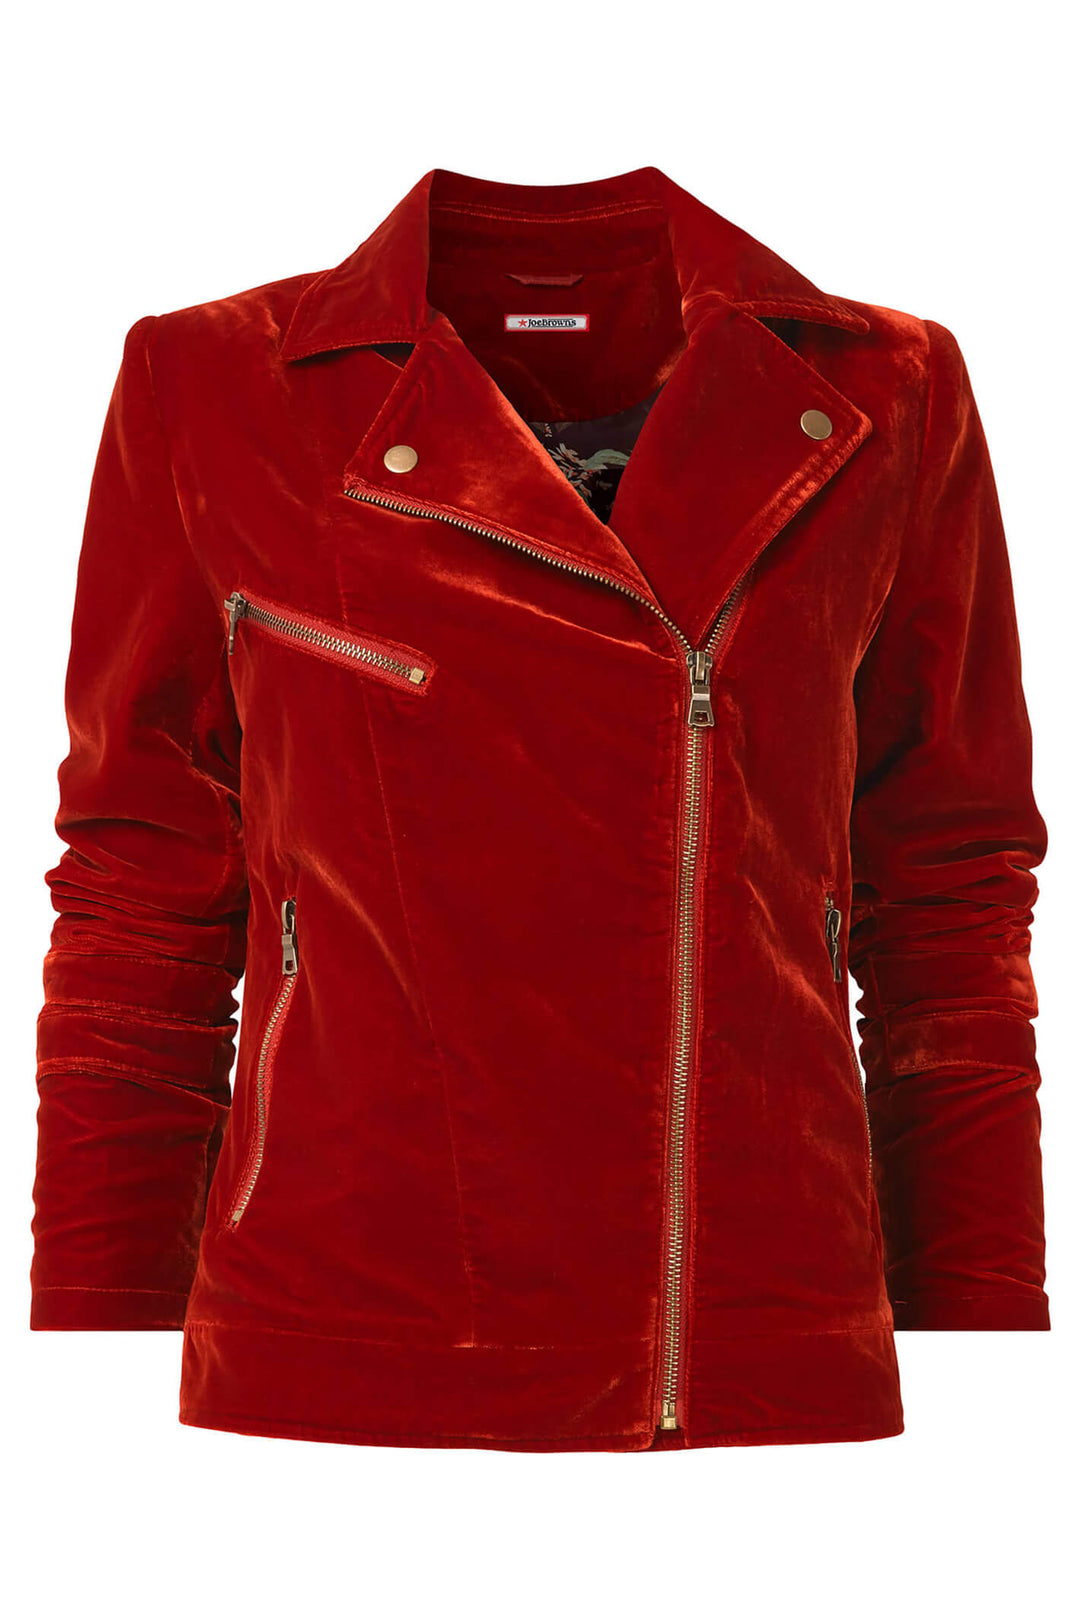 Joe Browns WJ605 Rust Red Wonderfully Velour Biker Style Jacket - Experience Boutique